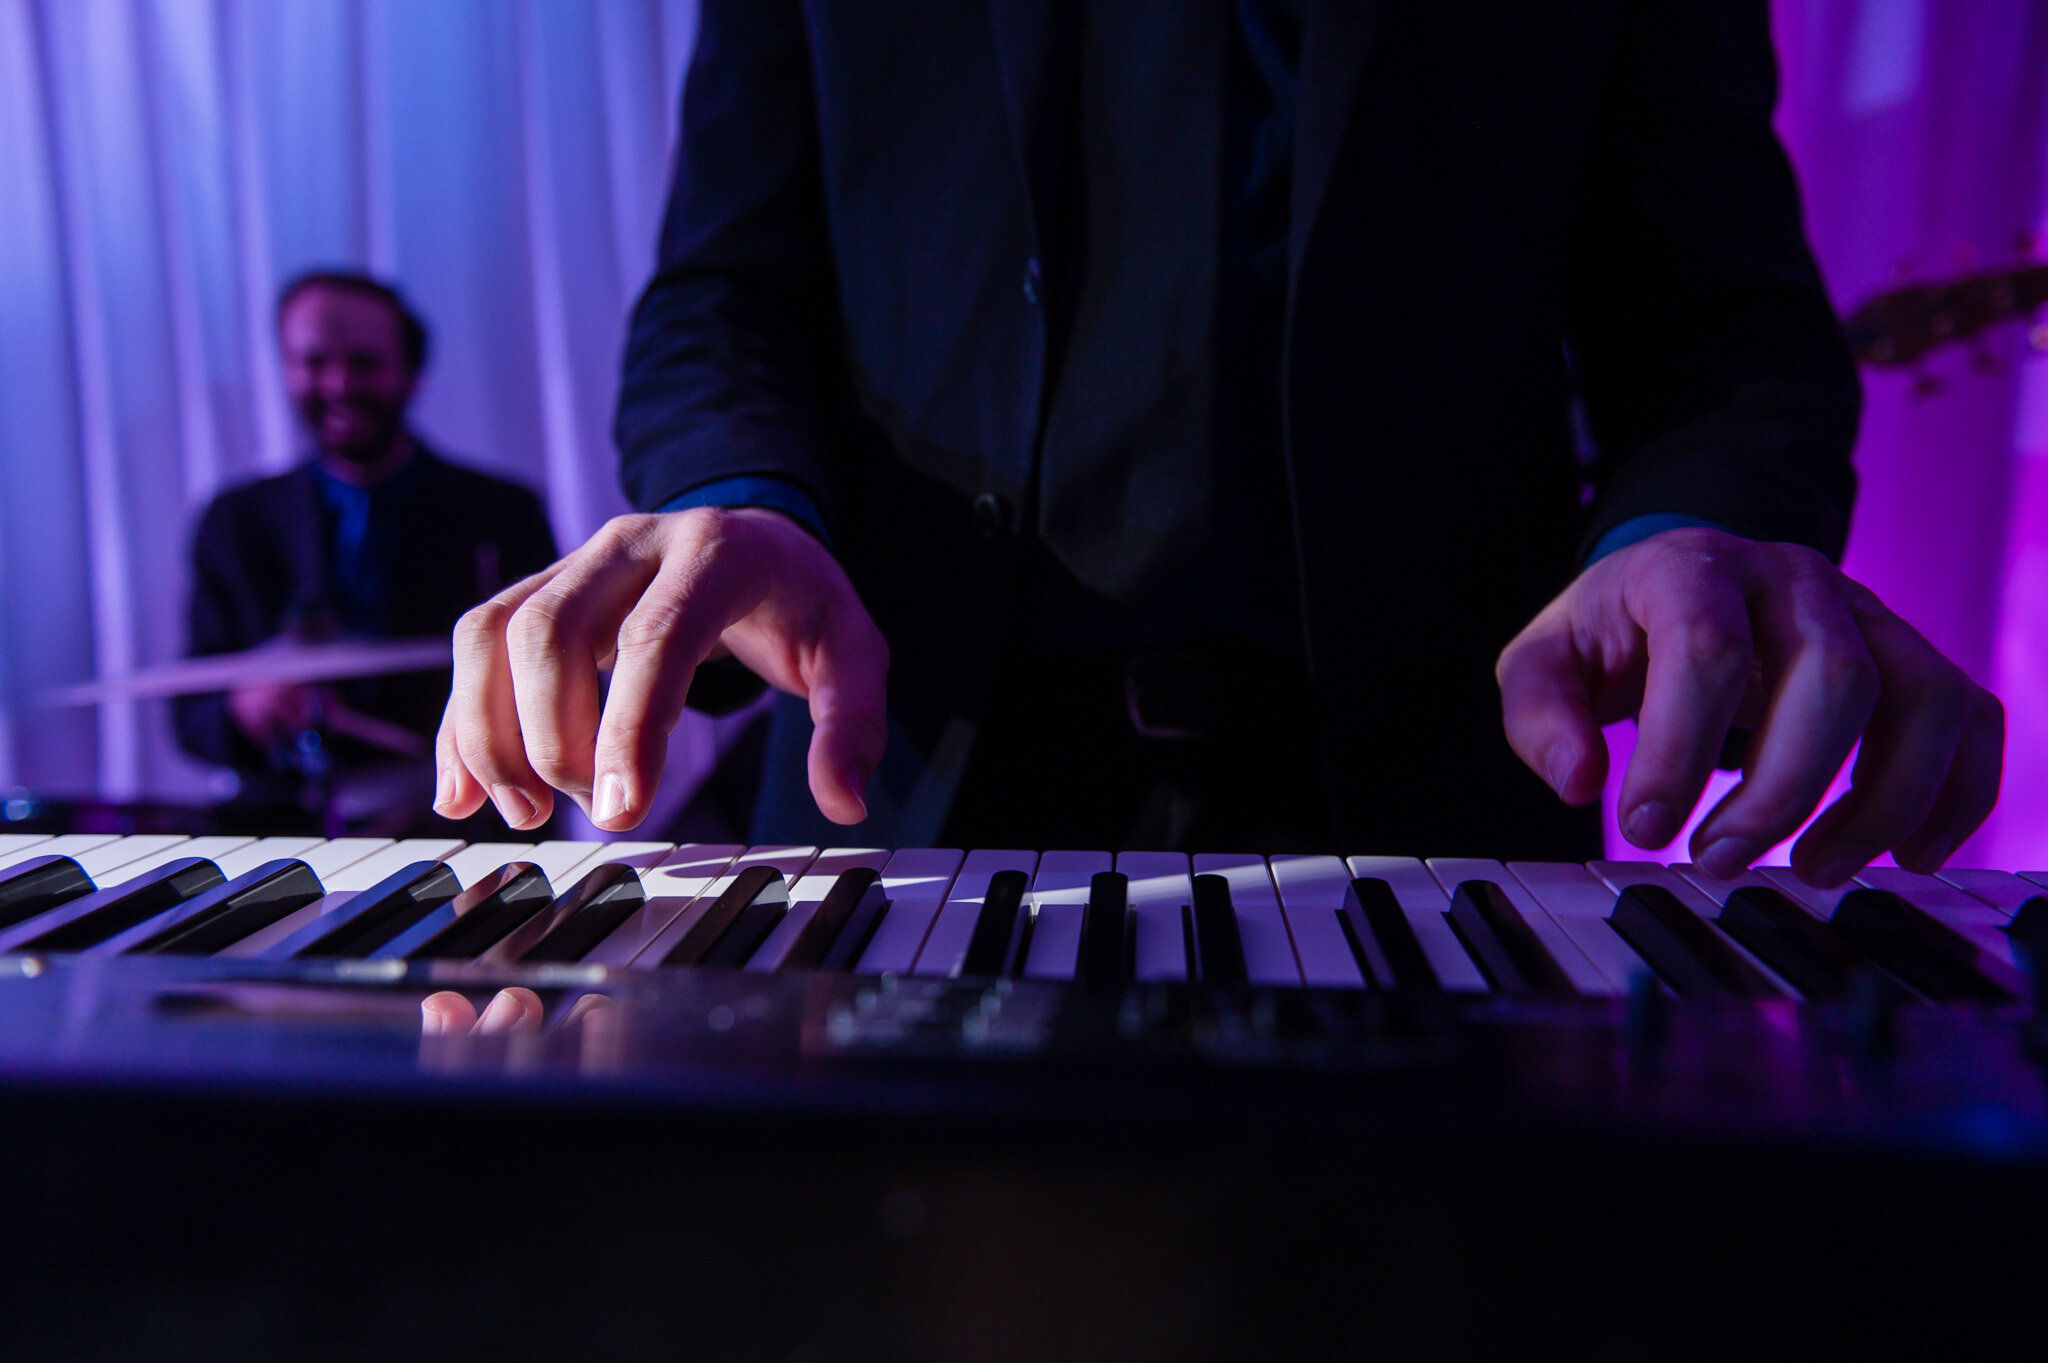 Bachelor Boys keyboard player at a wedding reception